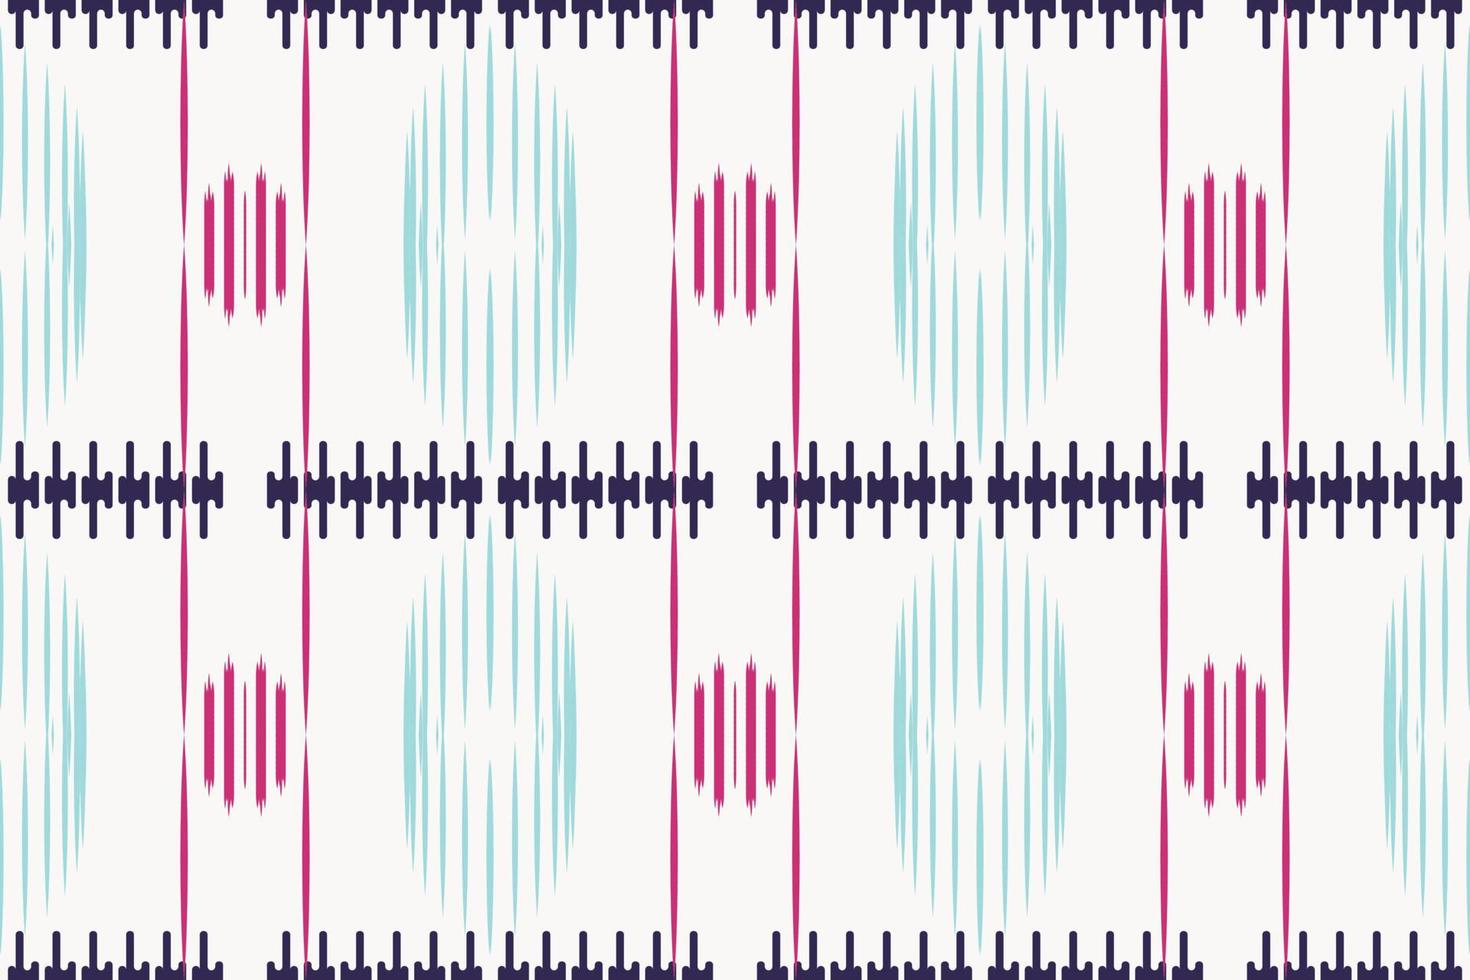 ikat floreale tribale sfondi senza soluzione di continuità modello. etnico geometrico ikkat batik digitale vettore tessile design per stampe tessuto saree Mughal spazzola simbolo andane struttura Kurti kurtis kurtas